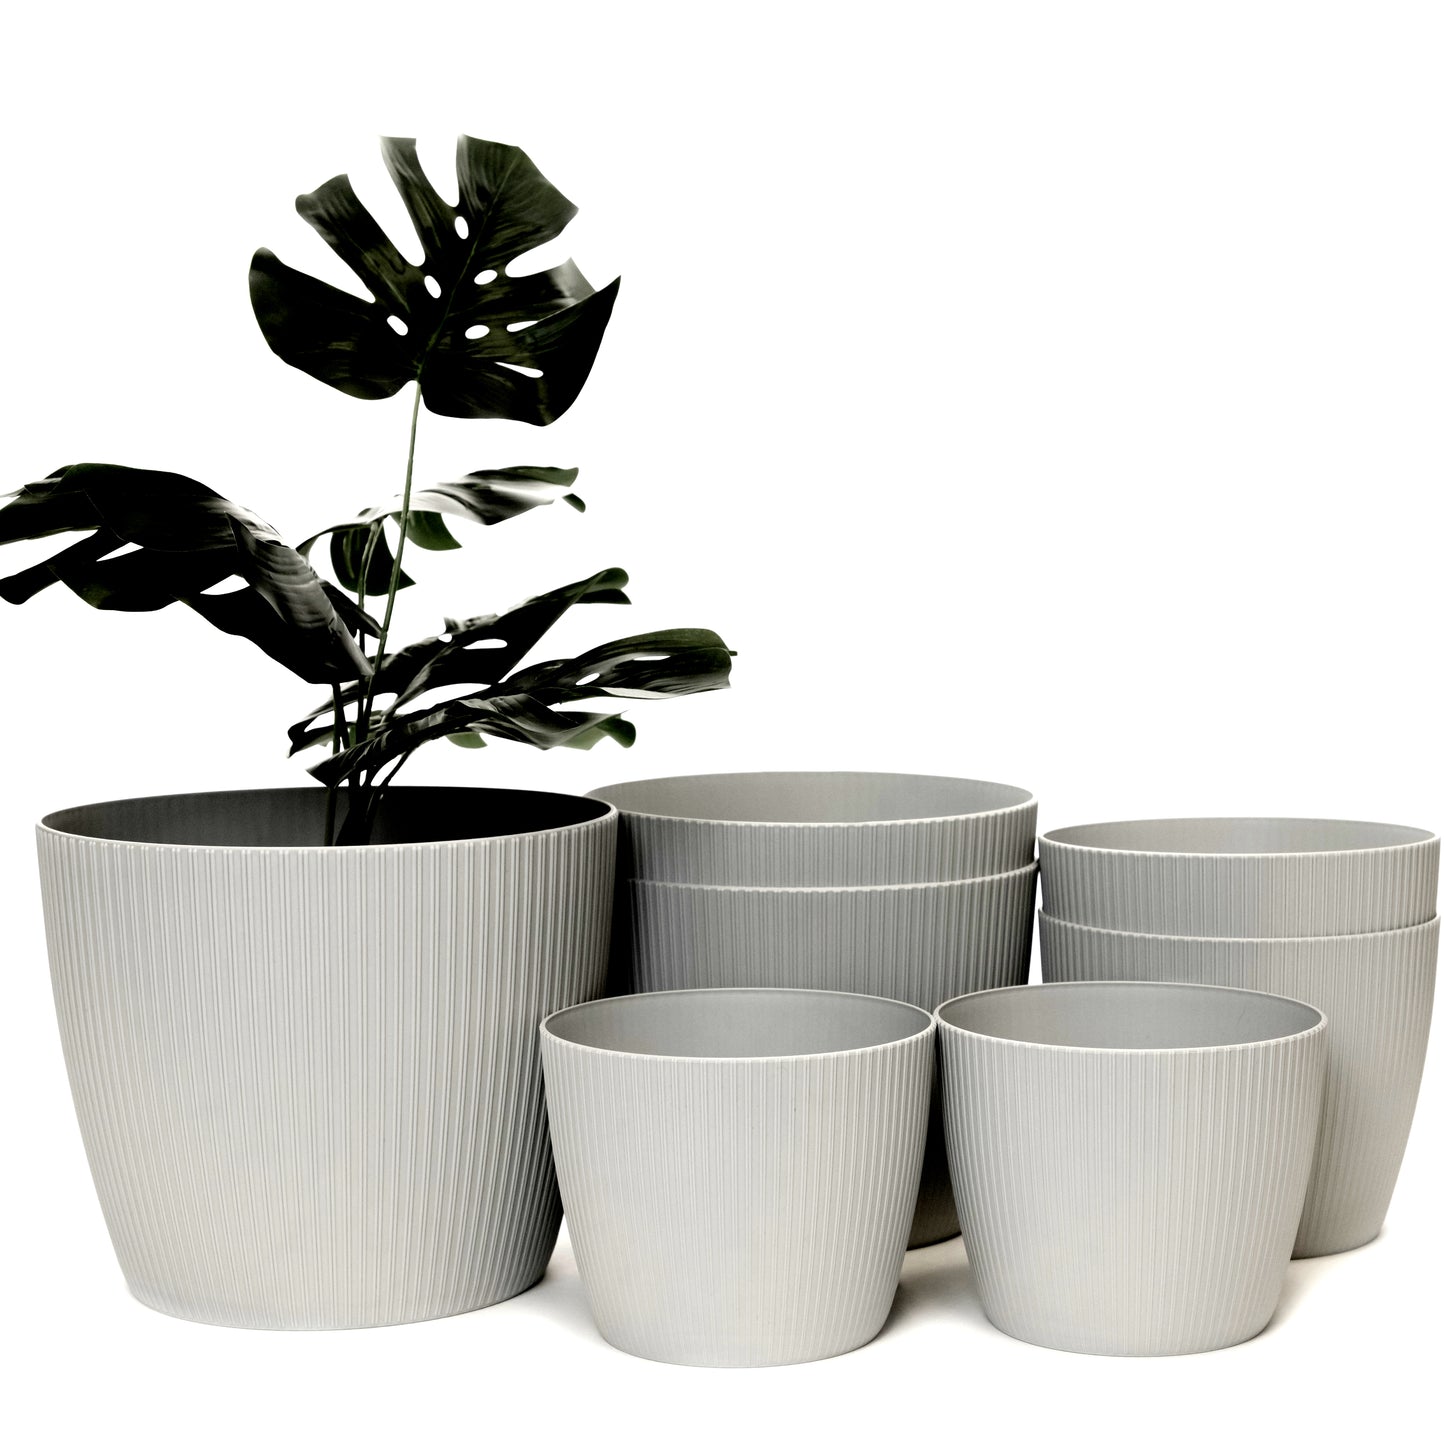 Plant Pots Indoor Striped Set of 7 Sizes 14/14/16/16/19/19/22cm